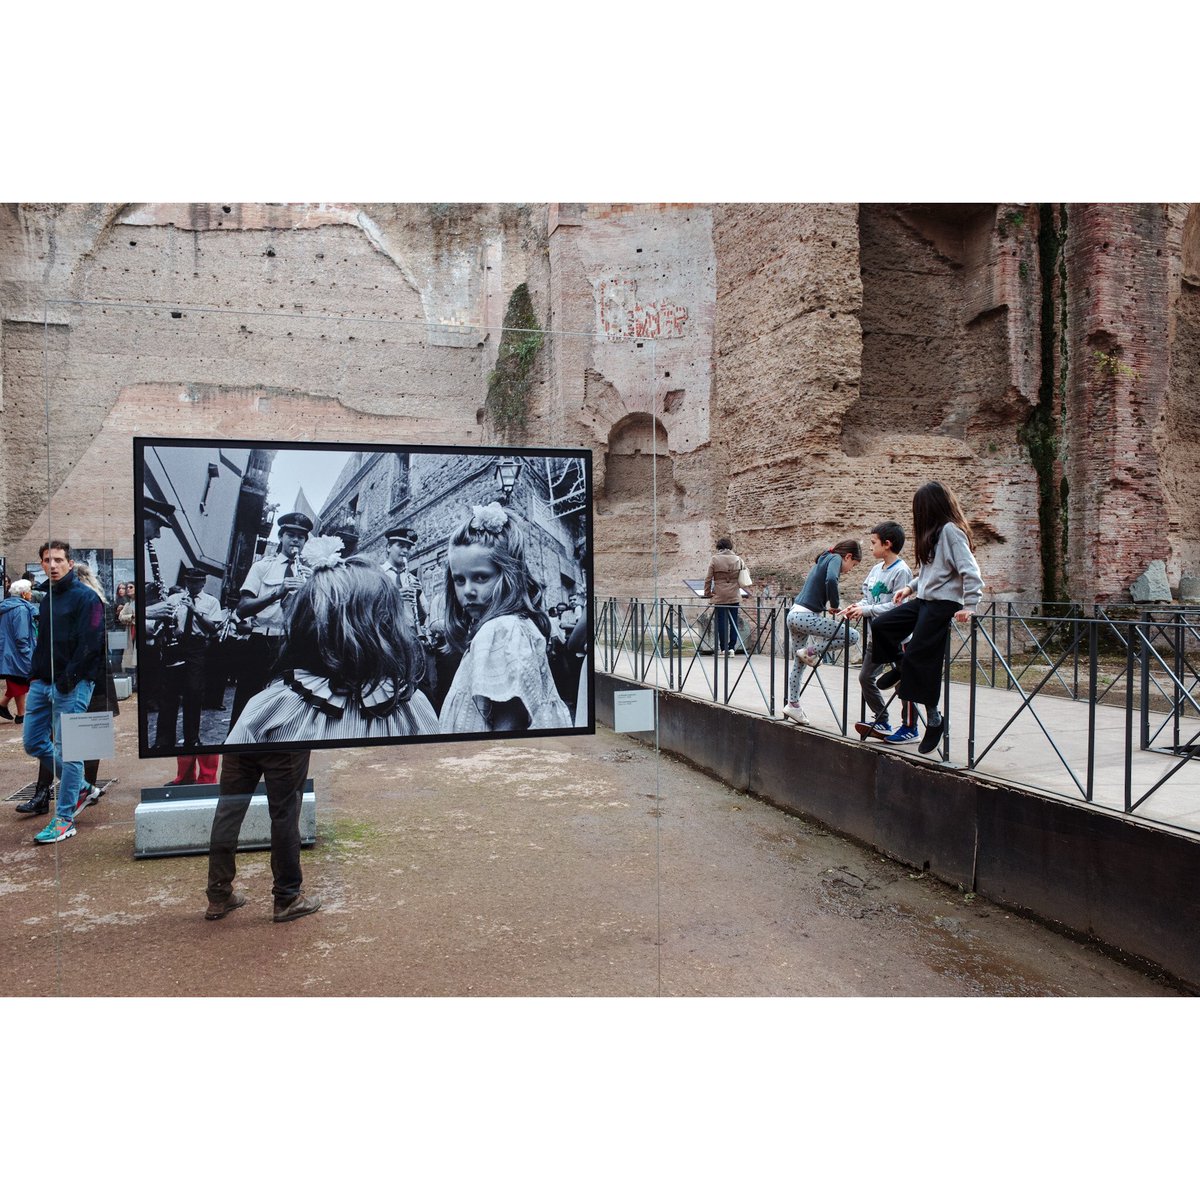 Final day of Letizia Battaglia Senza Fine exhibition at the Terme di Caracalla #shootGR_Rome #streetsofrome #colourstreetphotography #letiziabattaglia #canpubphoto #in_public_streets  #urbangeometry #socialdocumentary #grsnaps #ricoh_GR #GRist #rromastreet